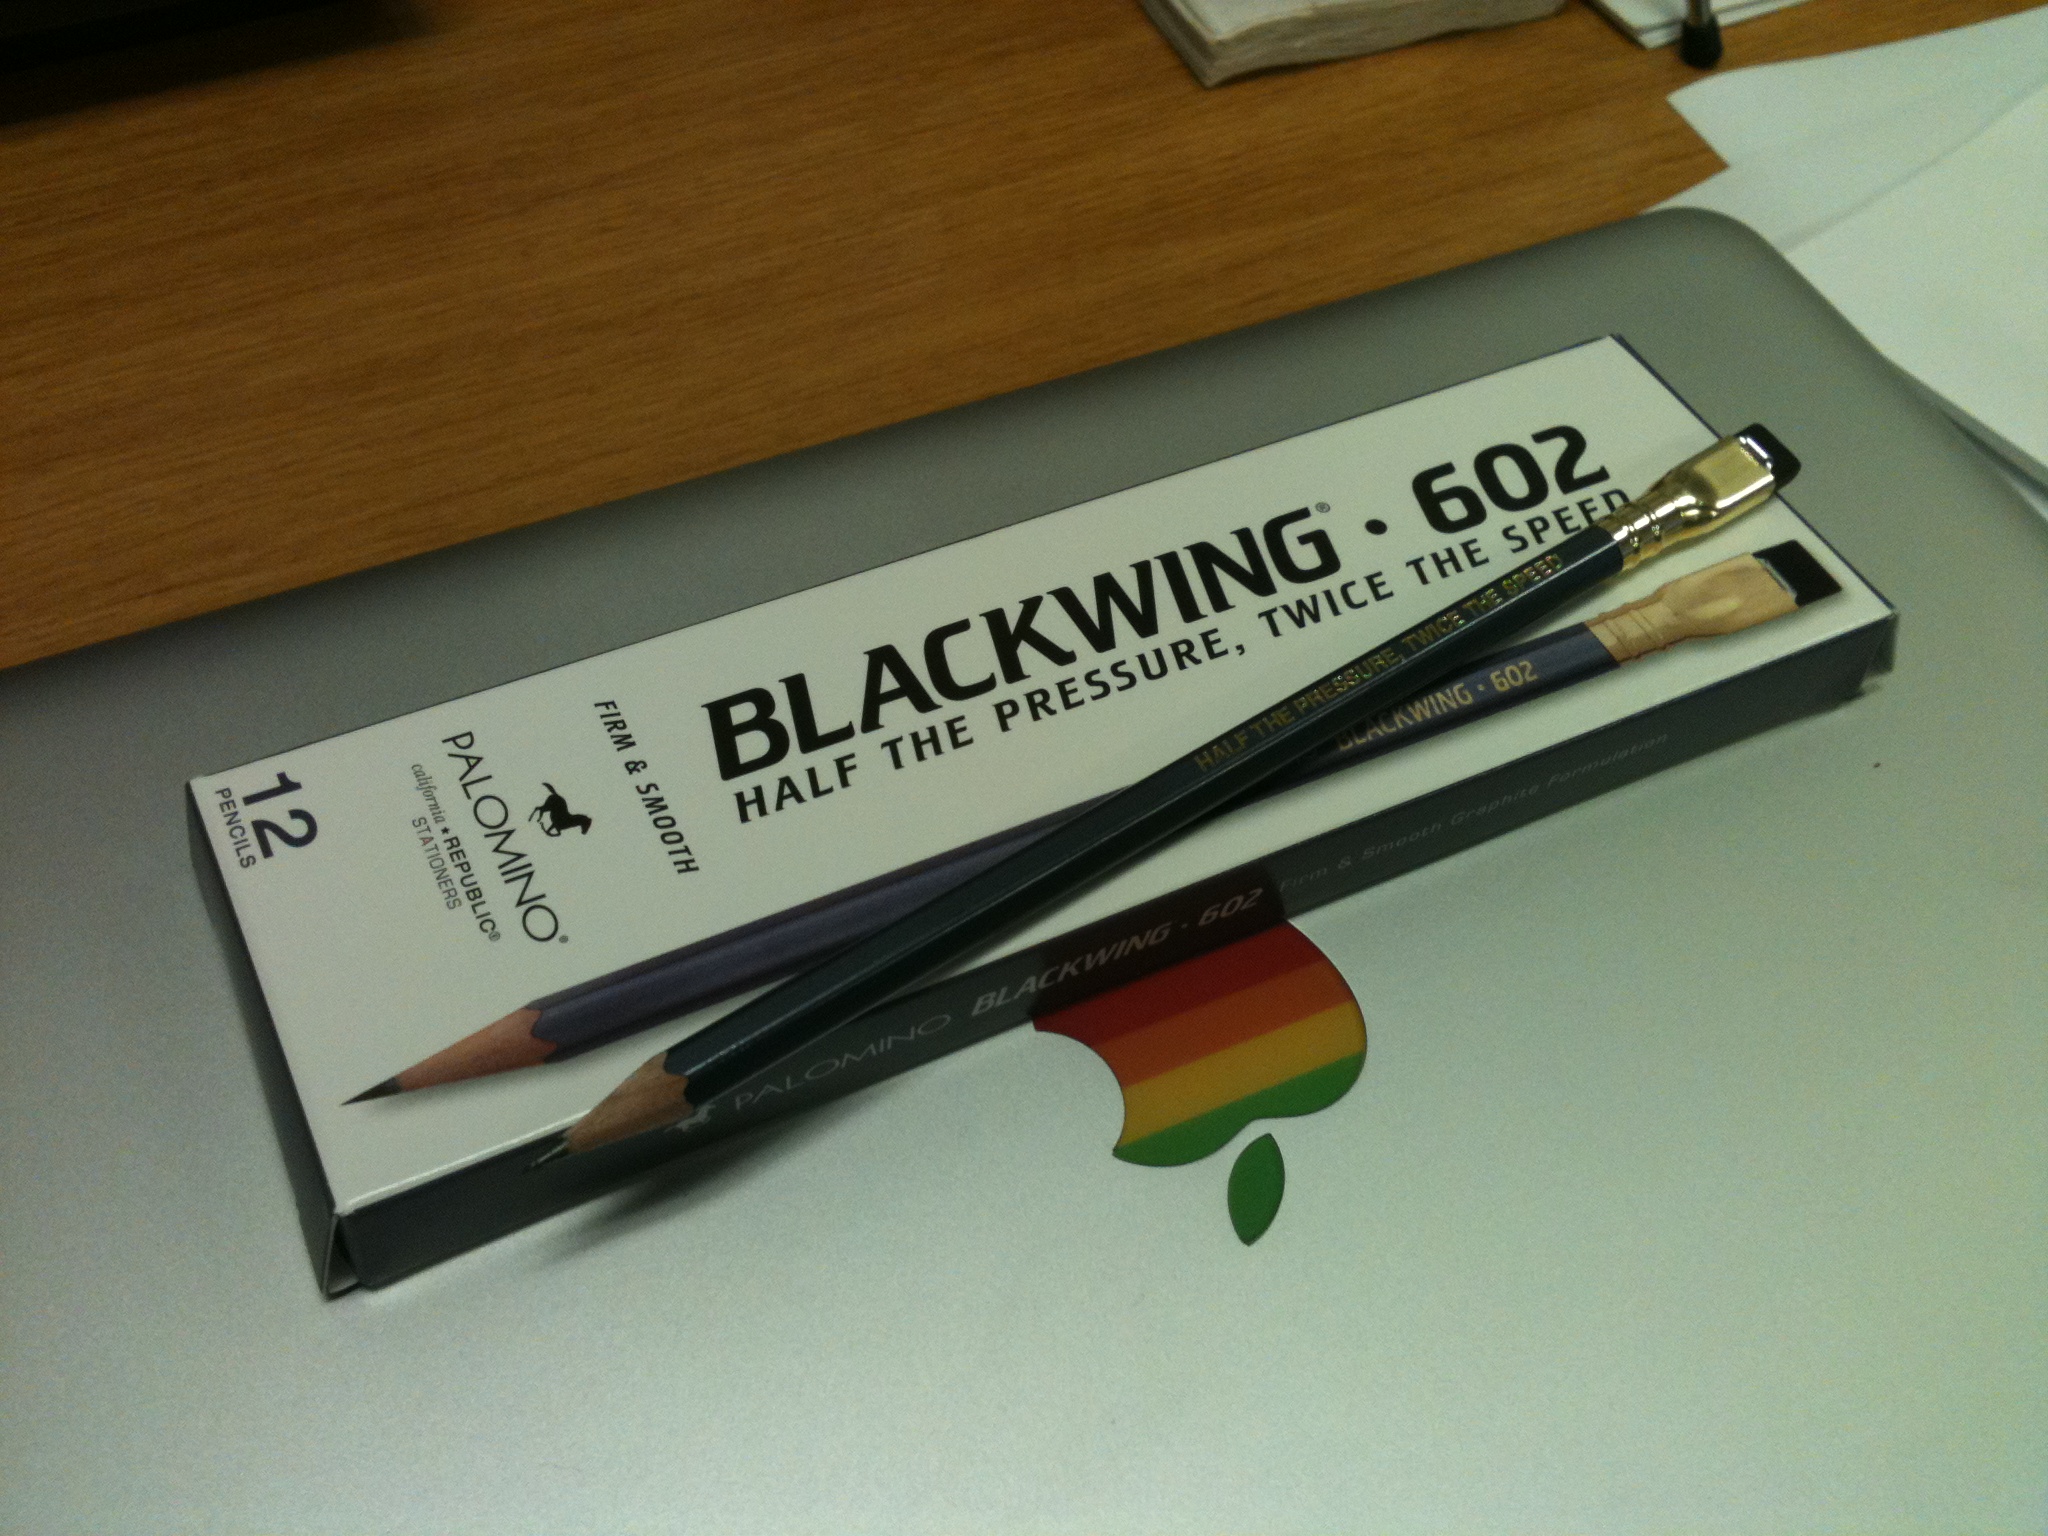 The Palomino Blackwing 602